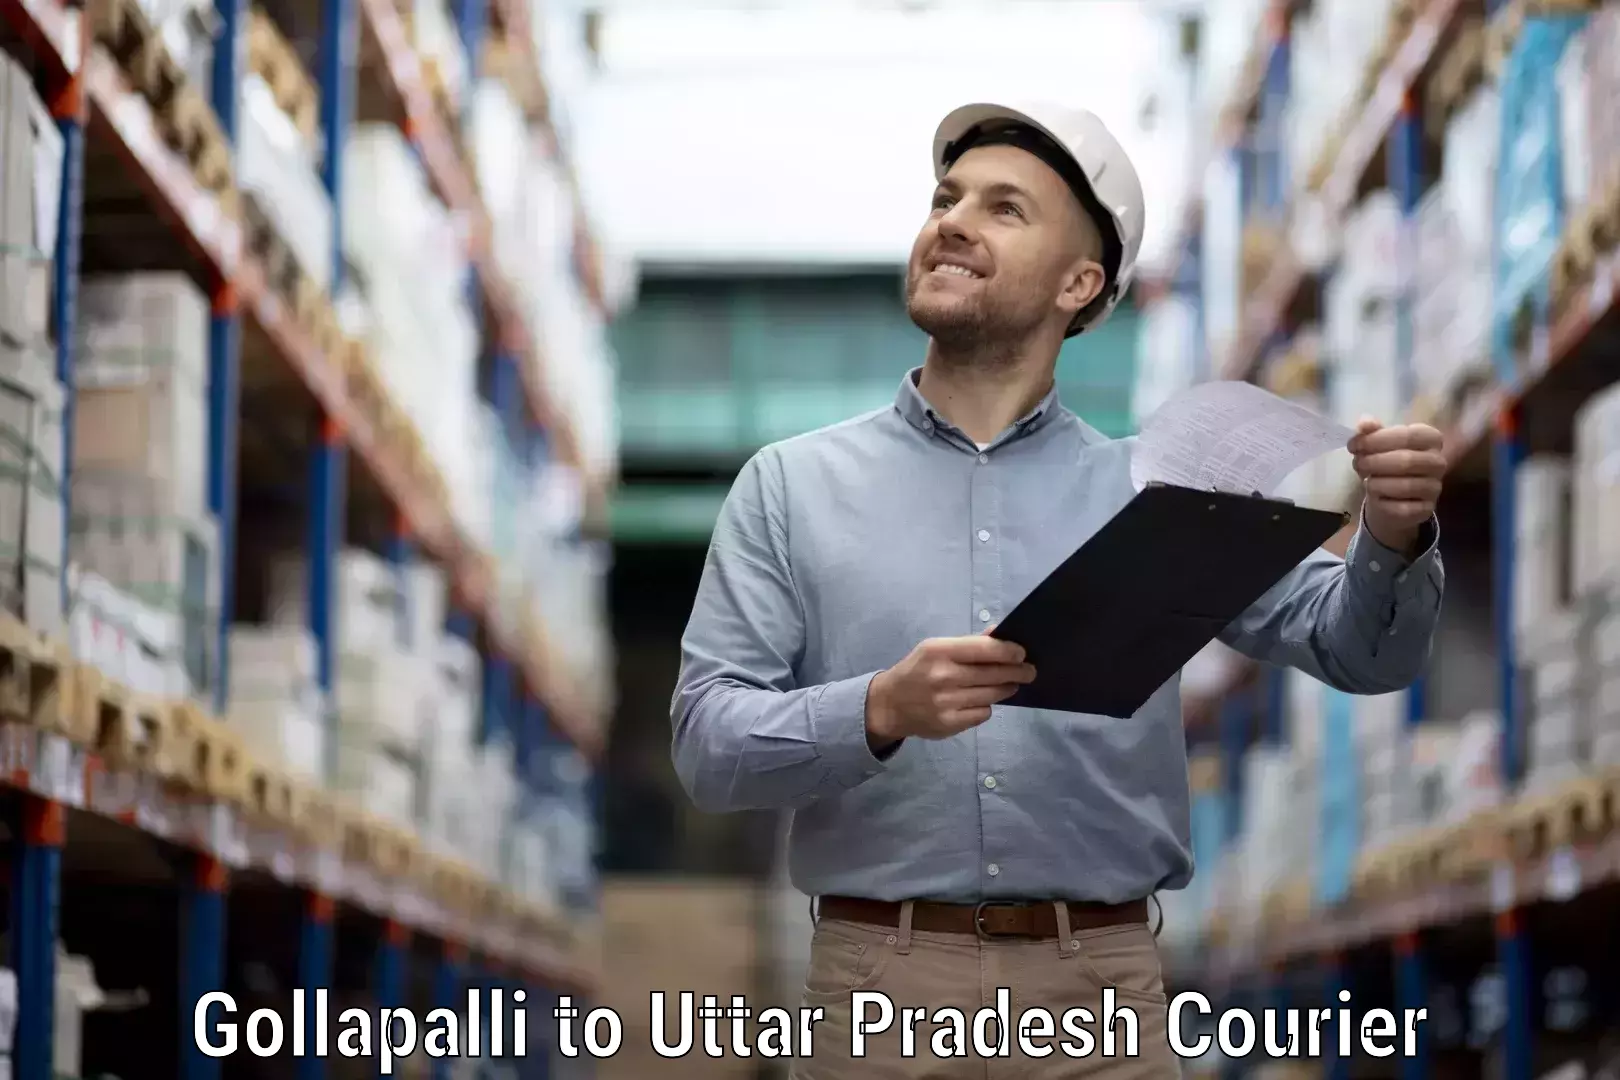 Efficient order fulfillment Gollapalli to Kauriram